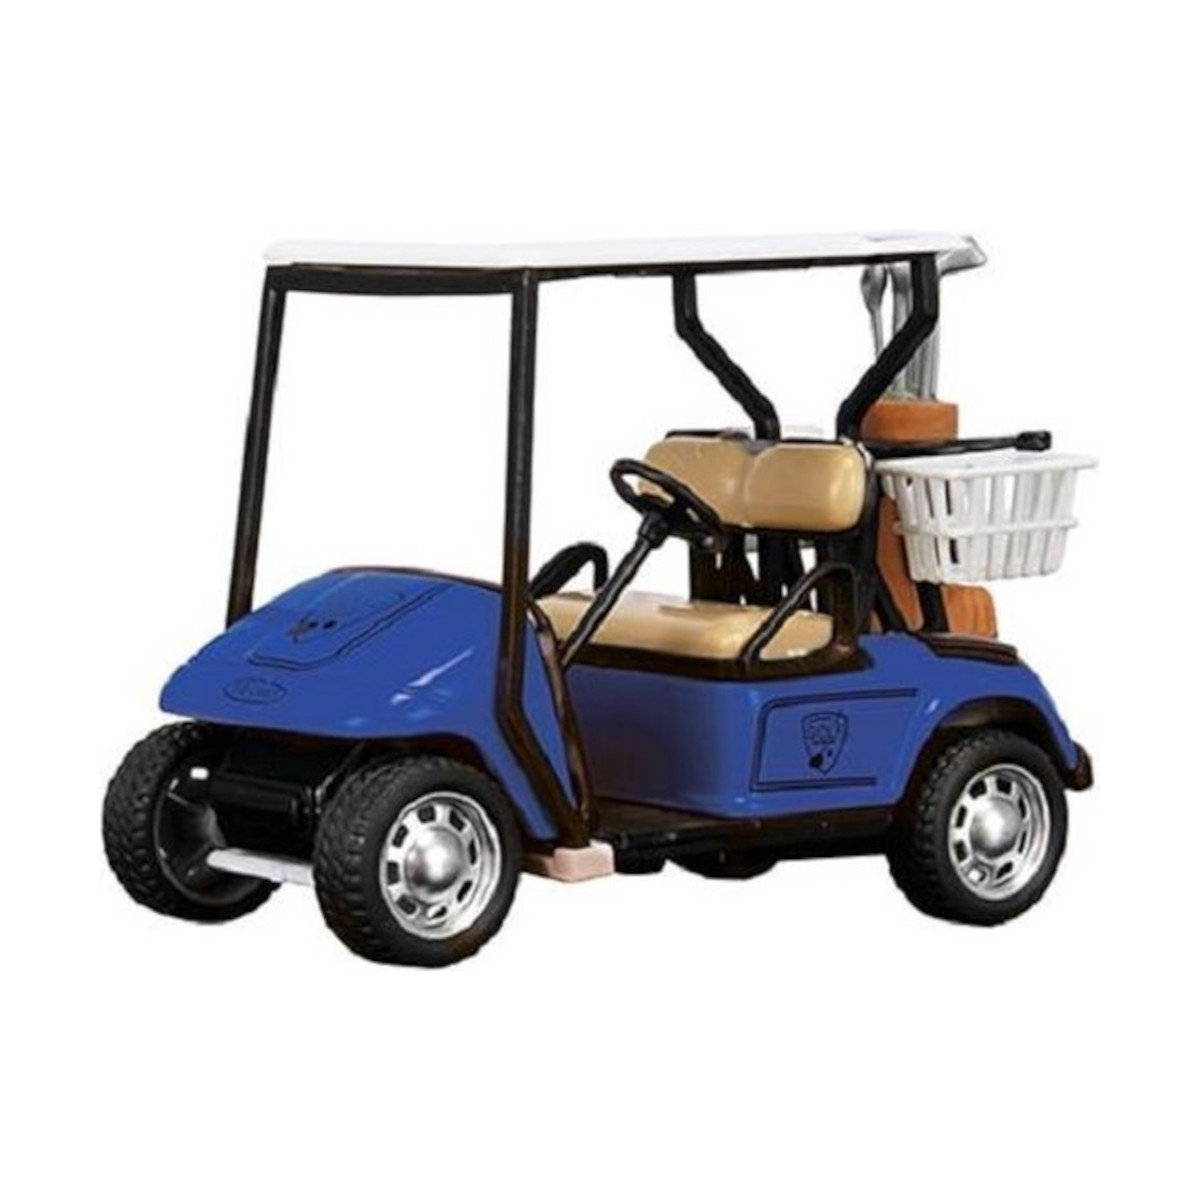 TOI-TOYS Metal World Golfwagen 1:20) Maßstab Spielzeugfahrzeug (blau